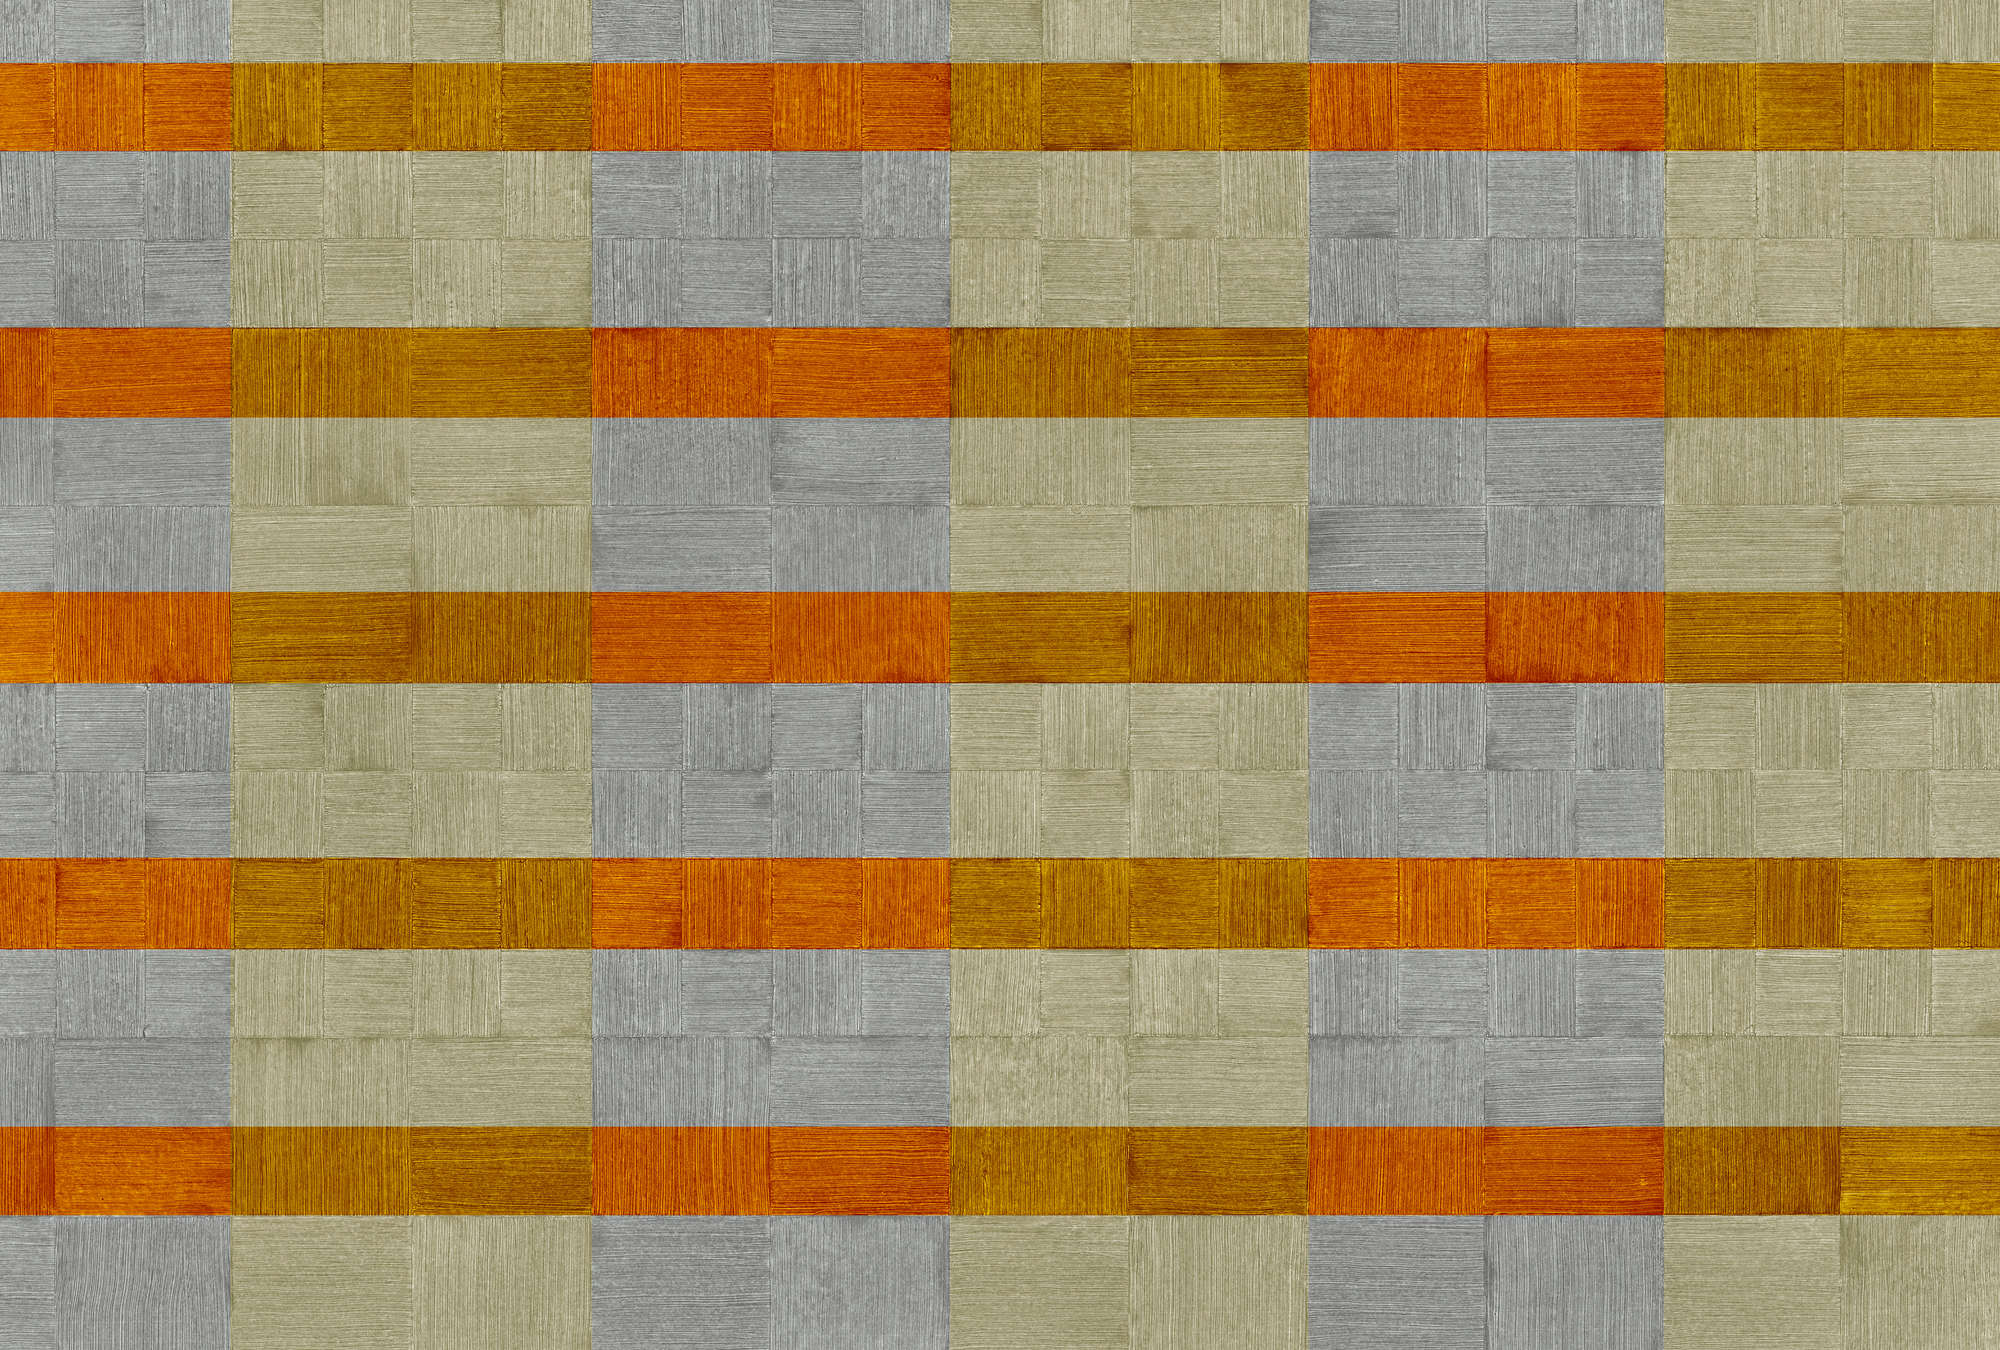             Photo wallpaper stripes & checkered texture design - grey, orange, brown
        